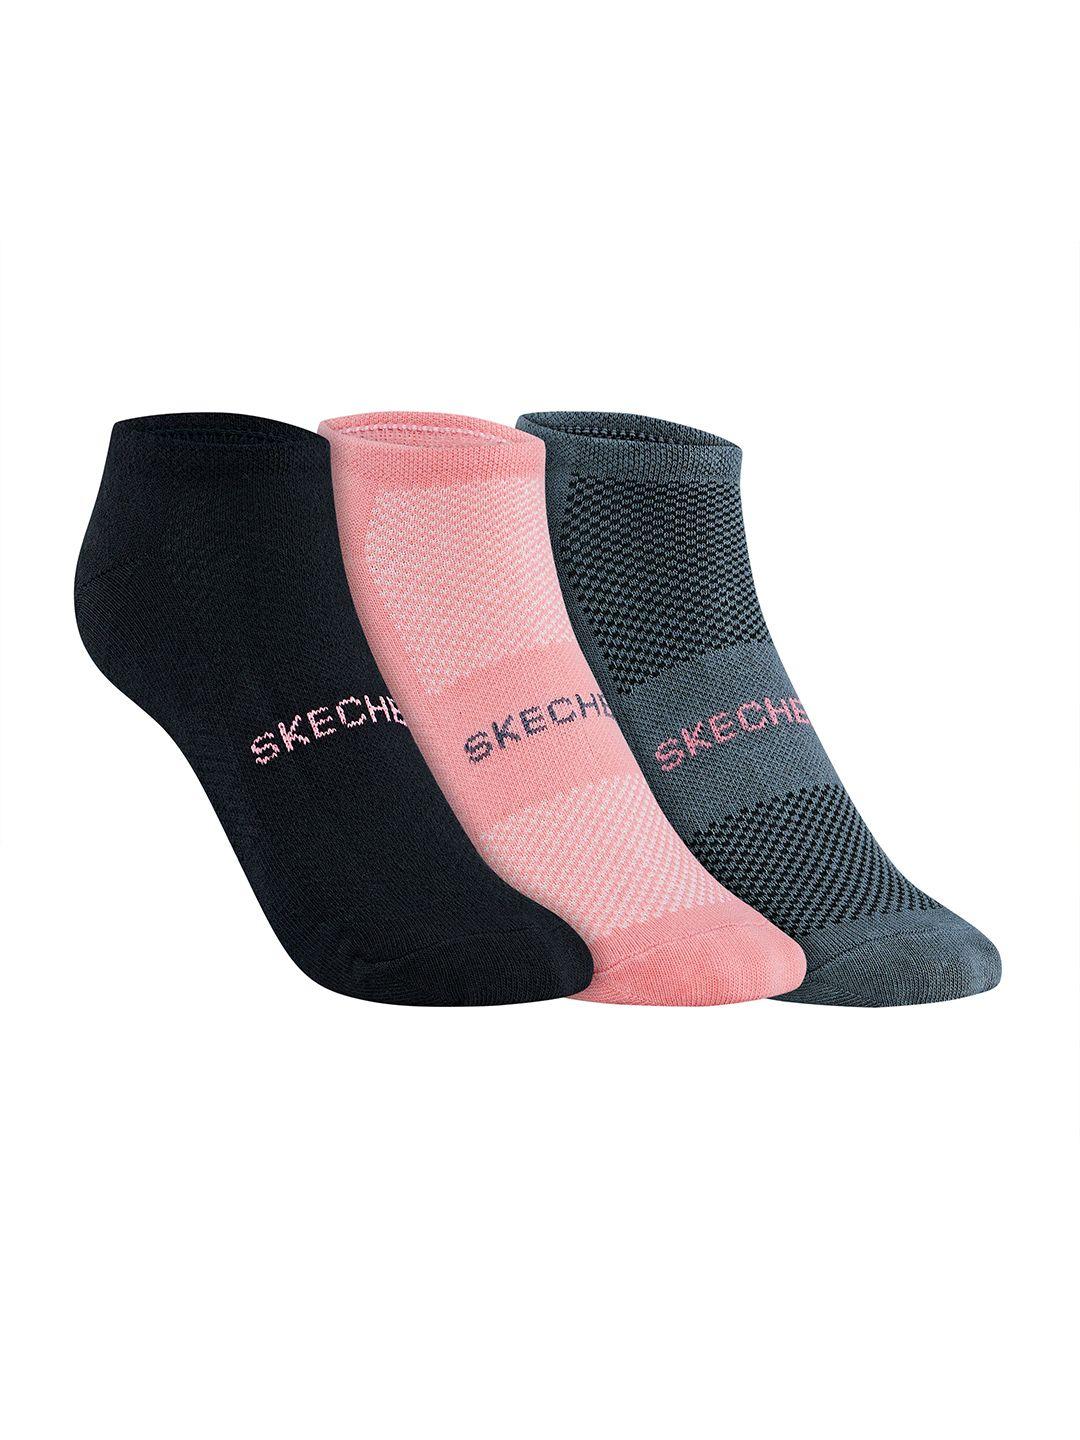 Skechers Women Pack Of 3 Patterned Cotton Microfiber Ankle Length Socks